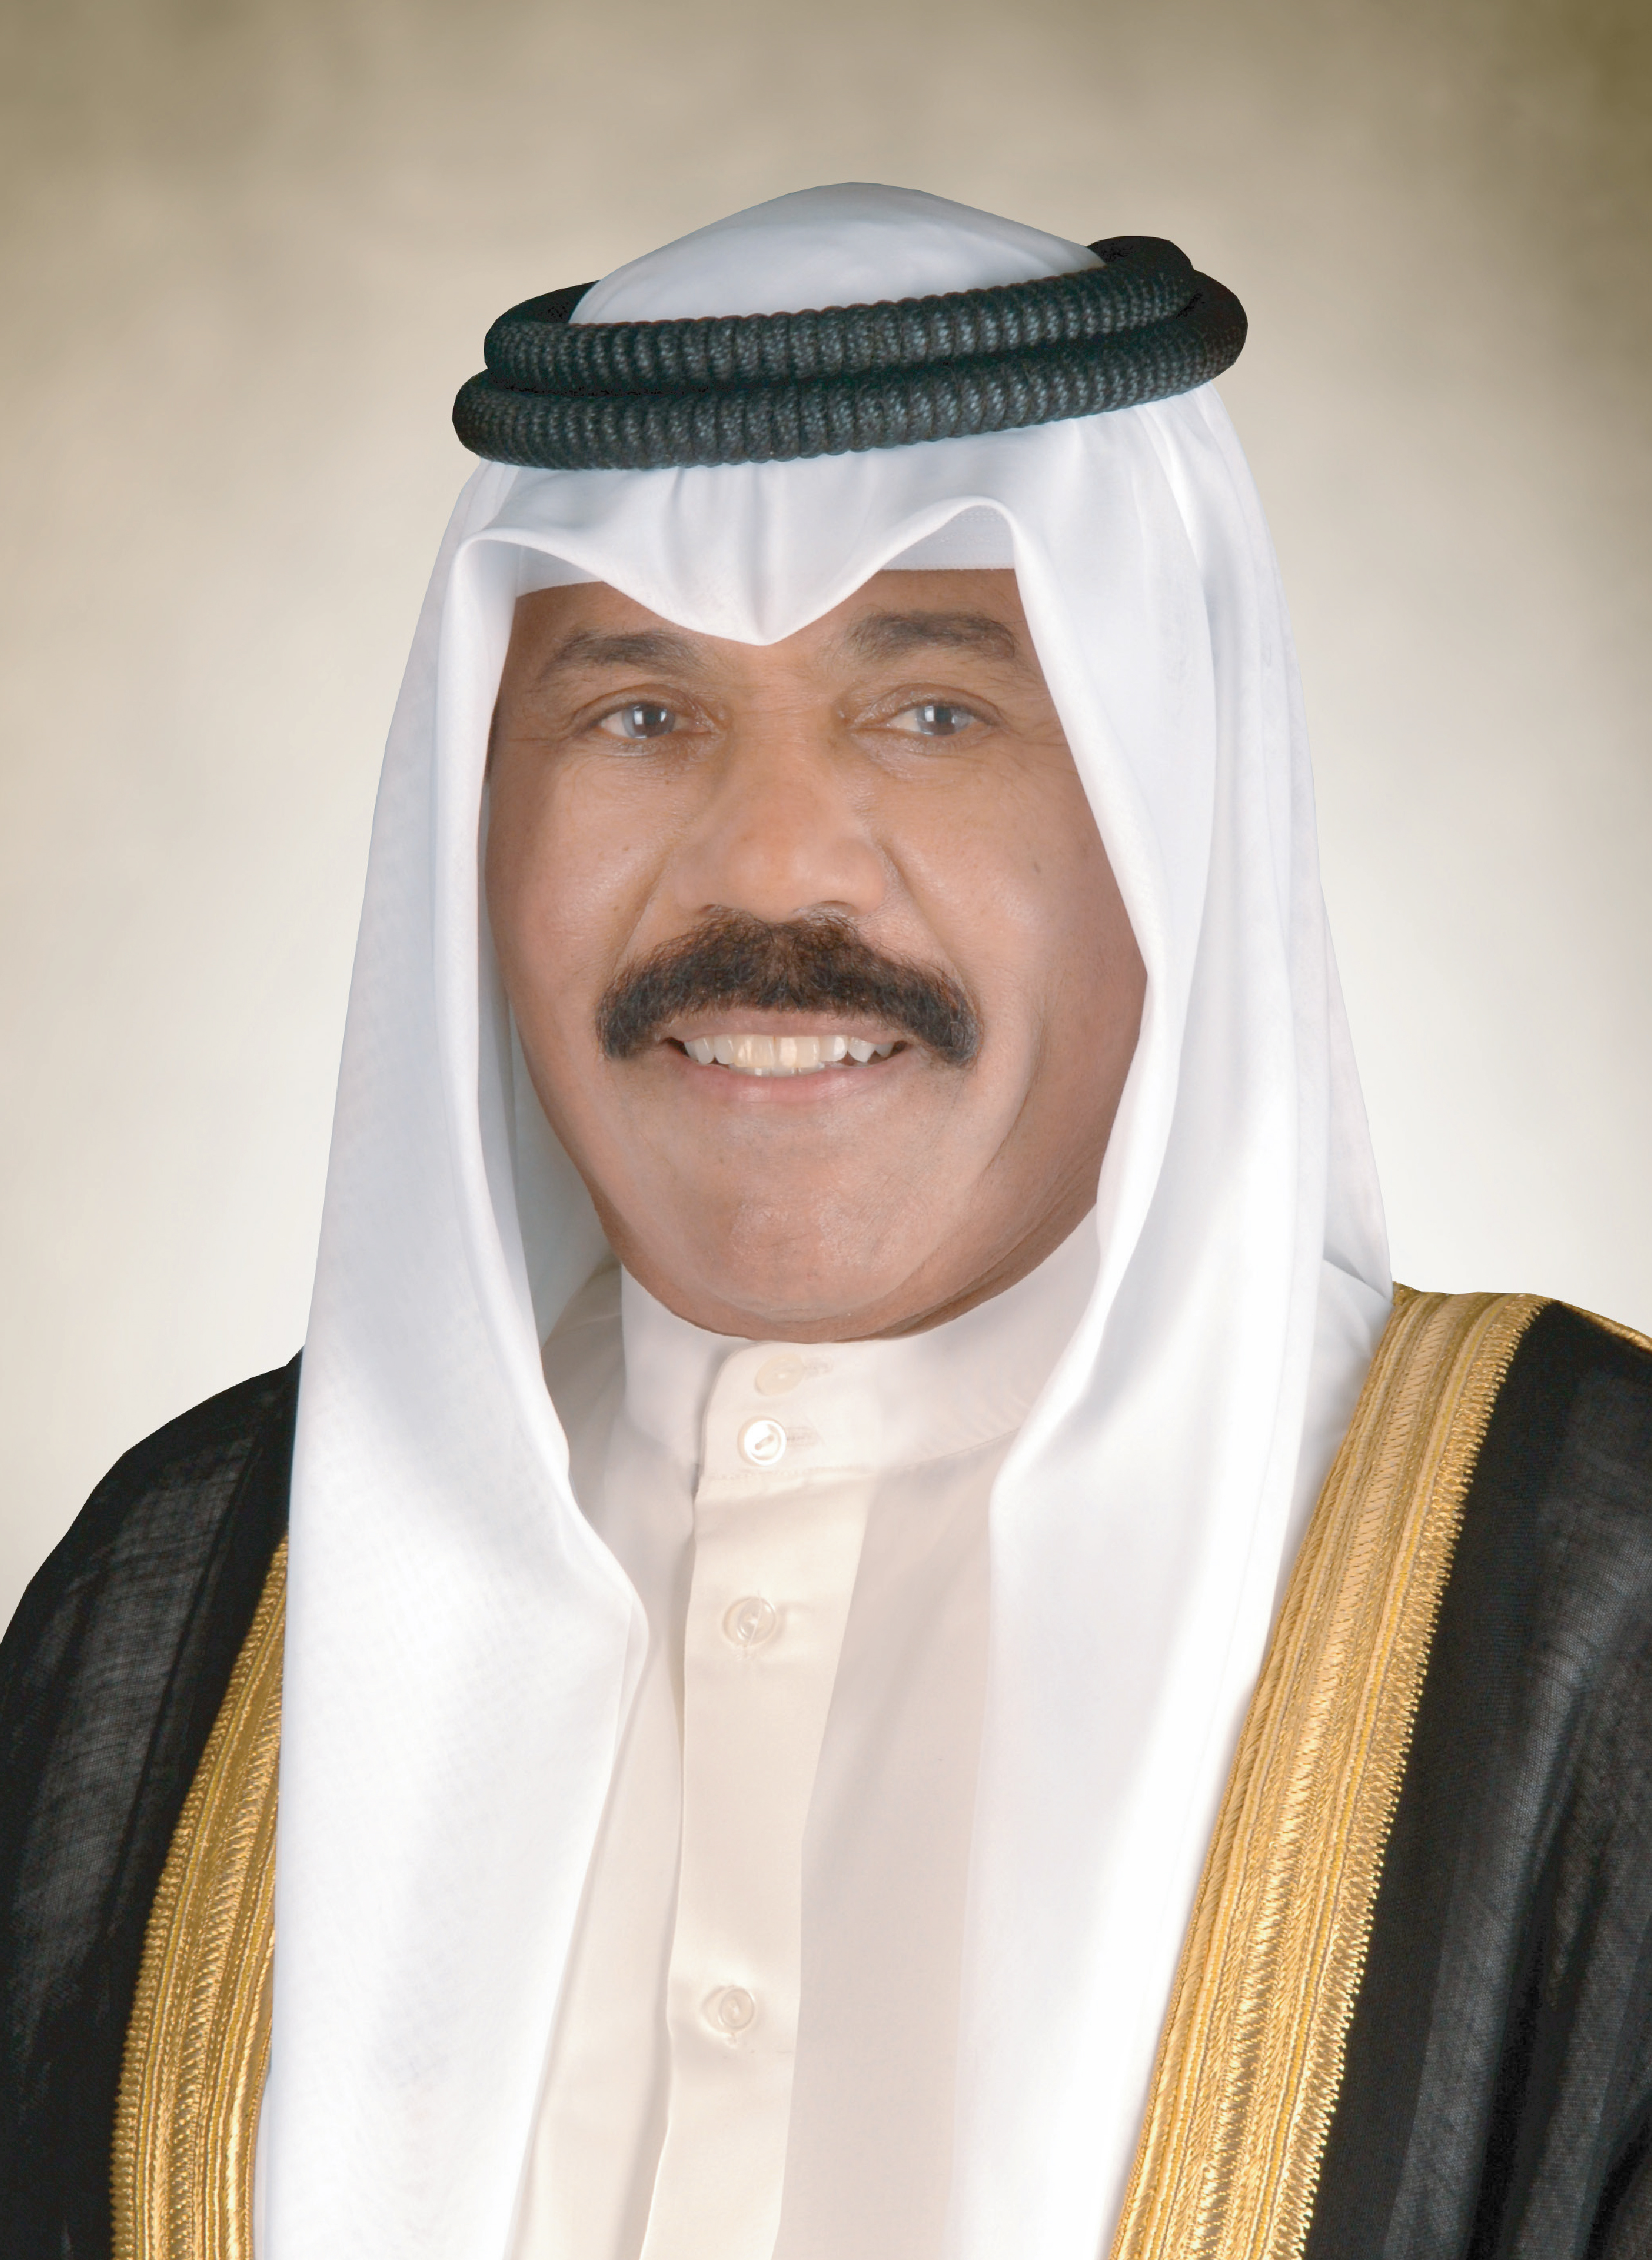 Kuwait Amir congratulates citizens, residents on nat'l days                                                                                                                                                                                               